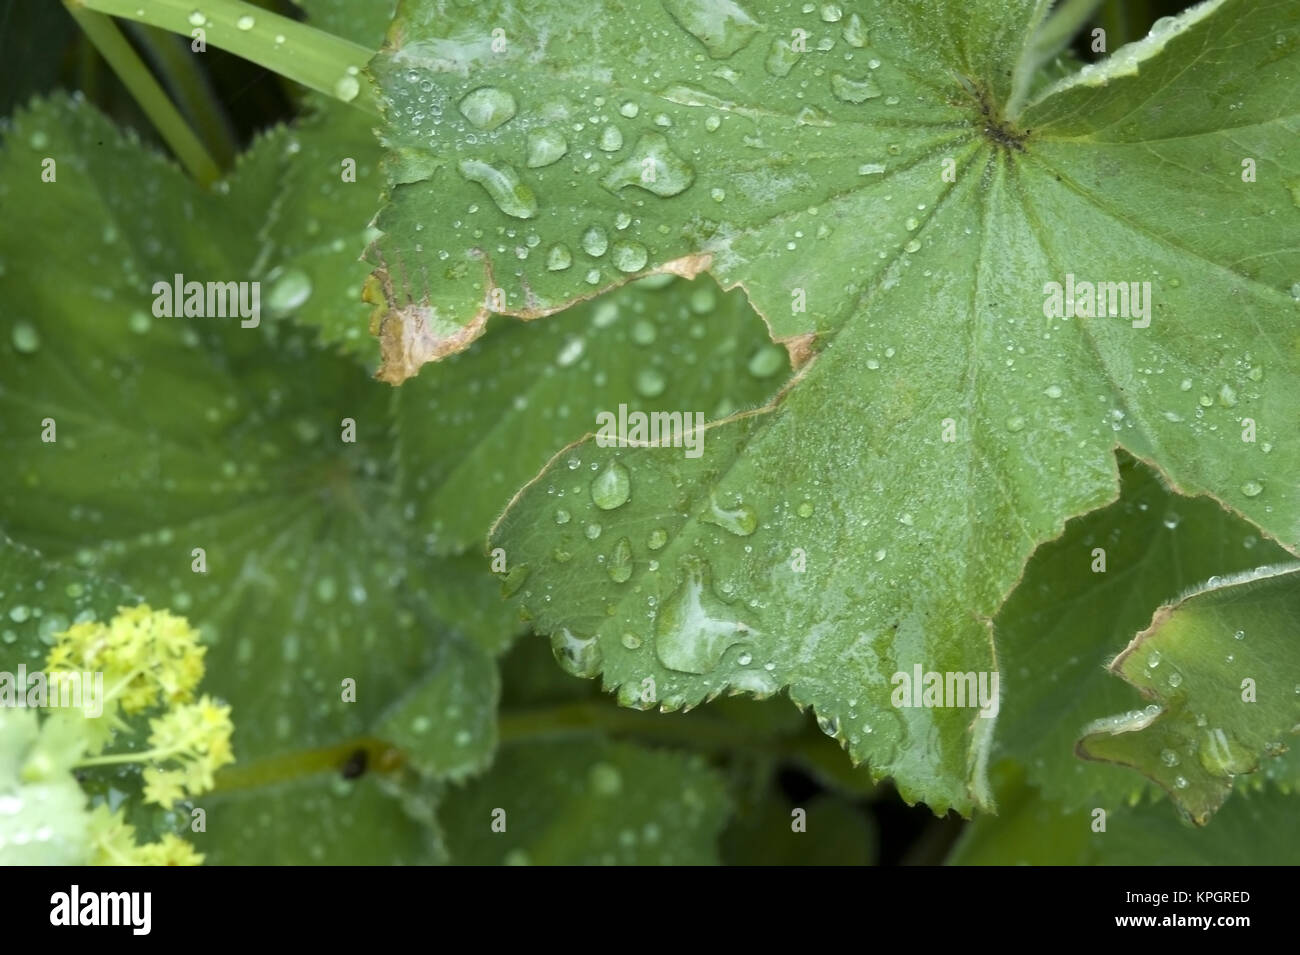 Regentropfen auf Bl?ttern - rain drops on leaves Stock Photo